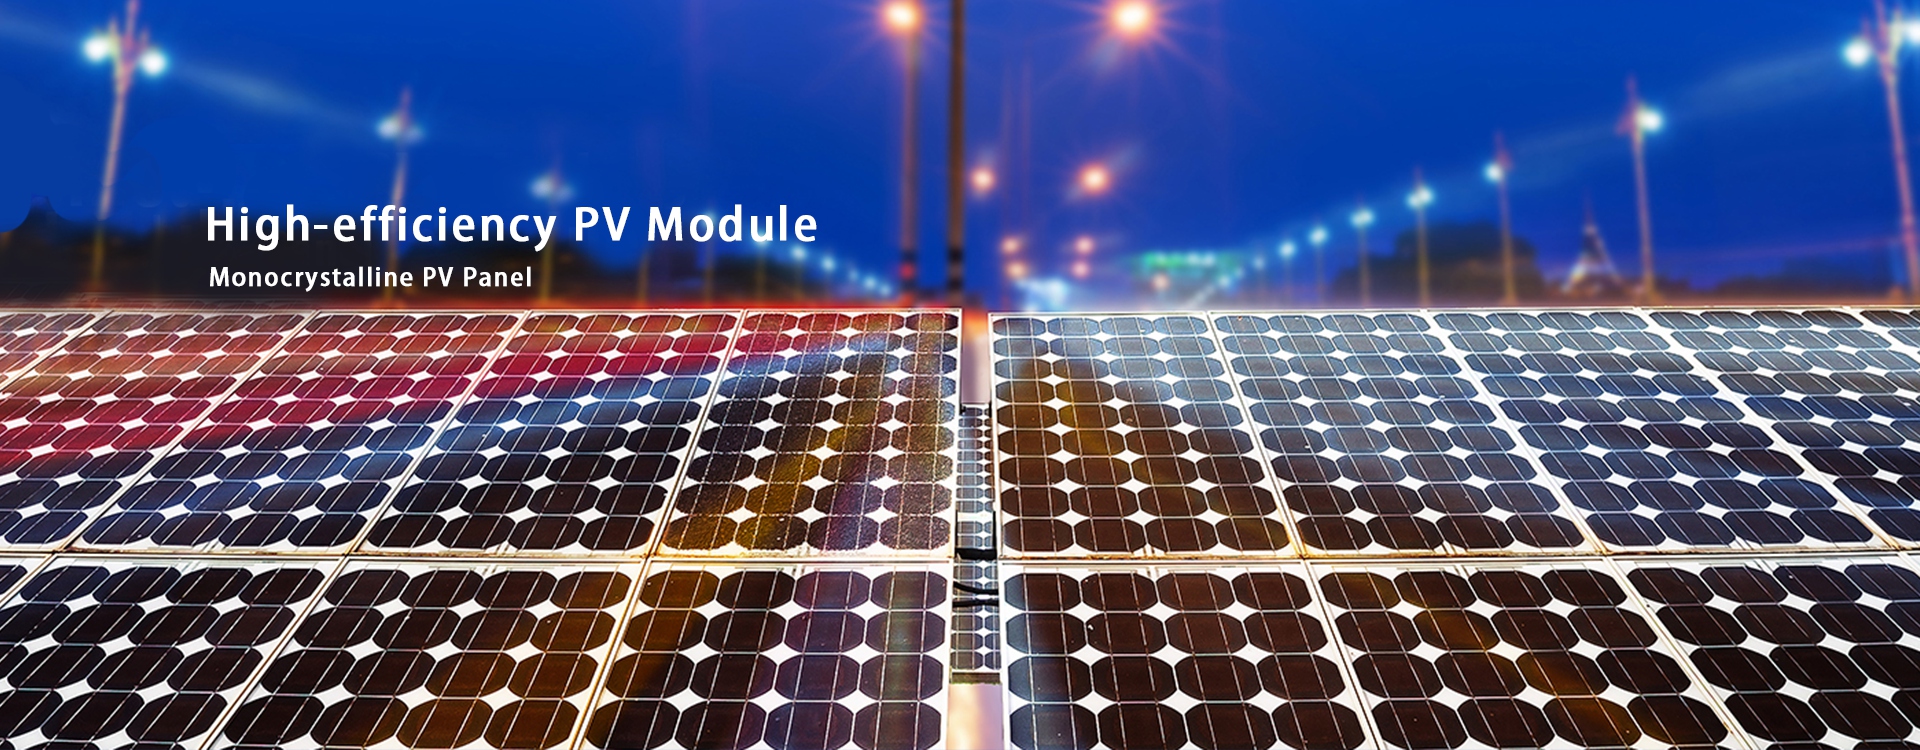 Painel fotovoltaico monocristalino de módulo fotovoltaico de alta eficiência